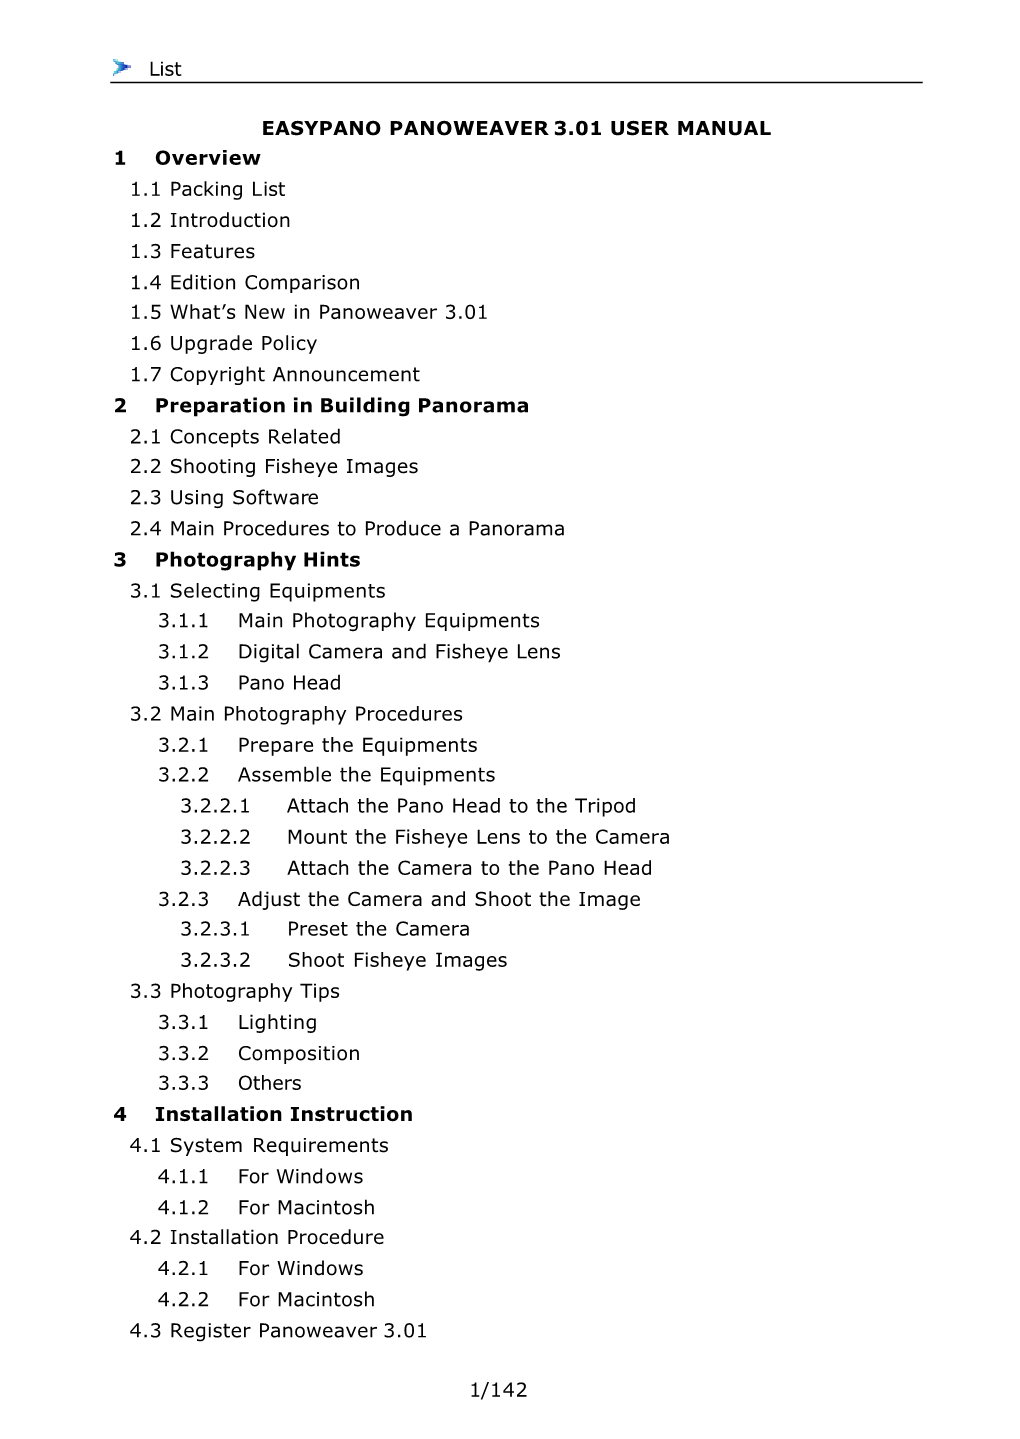 Panoweaver 3.01 User Manual with JRE 1.4.1